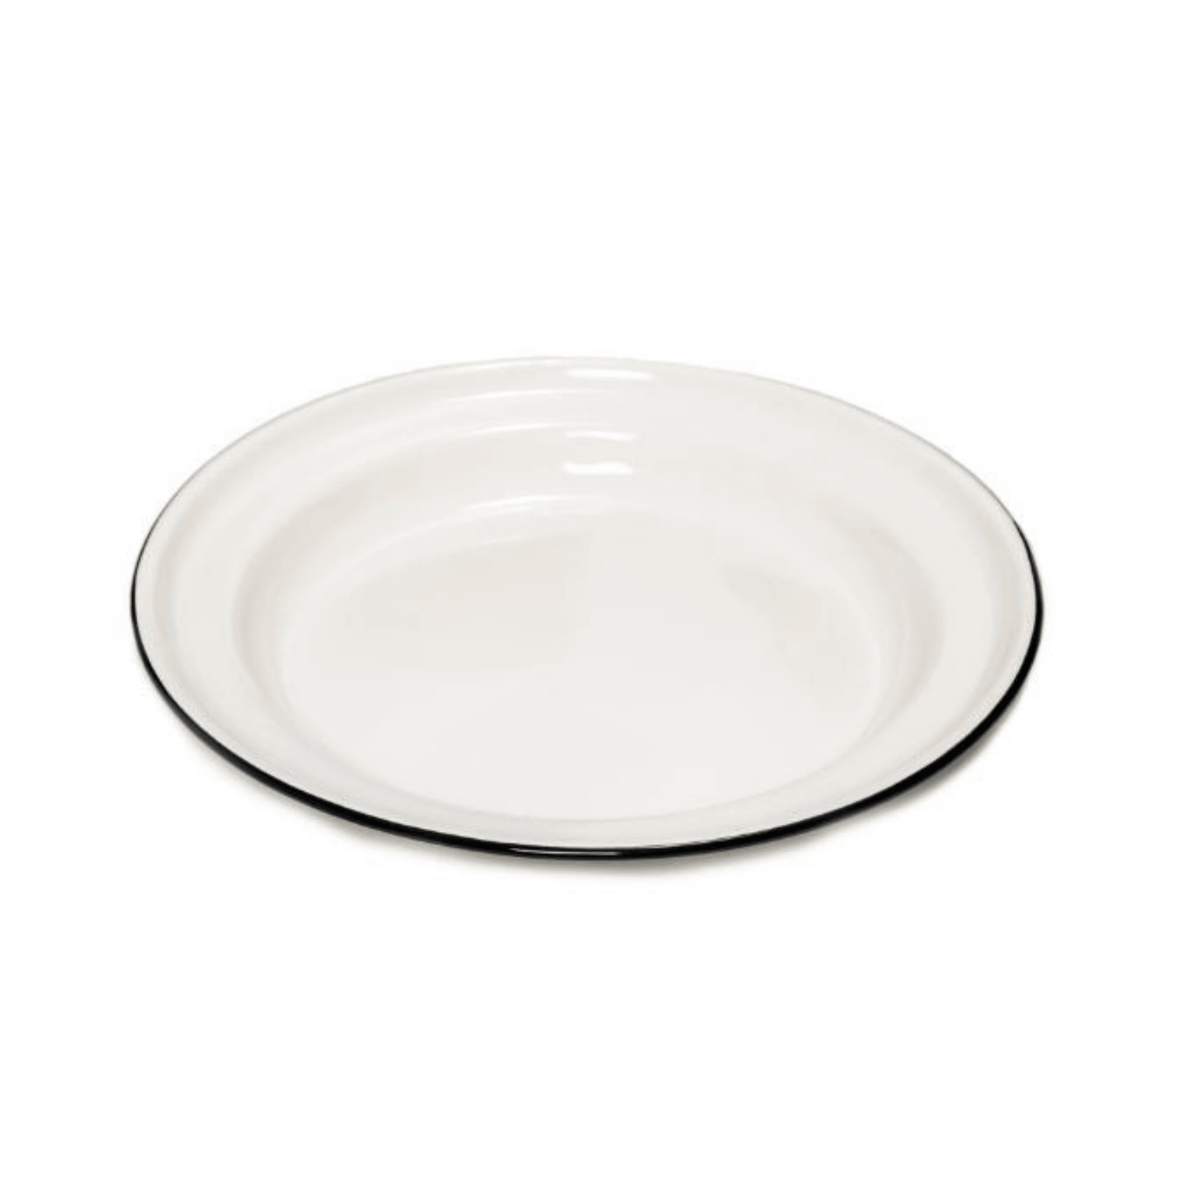 24cm Cream Enamel Plate with Black Rim - BESPOKE77